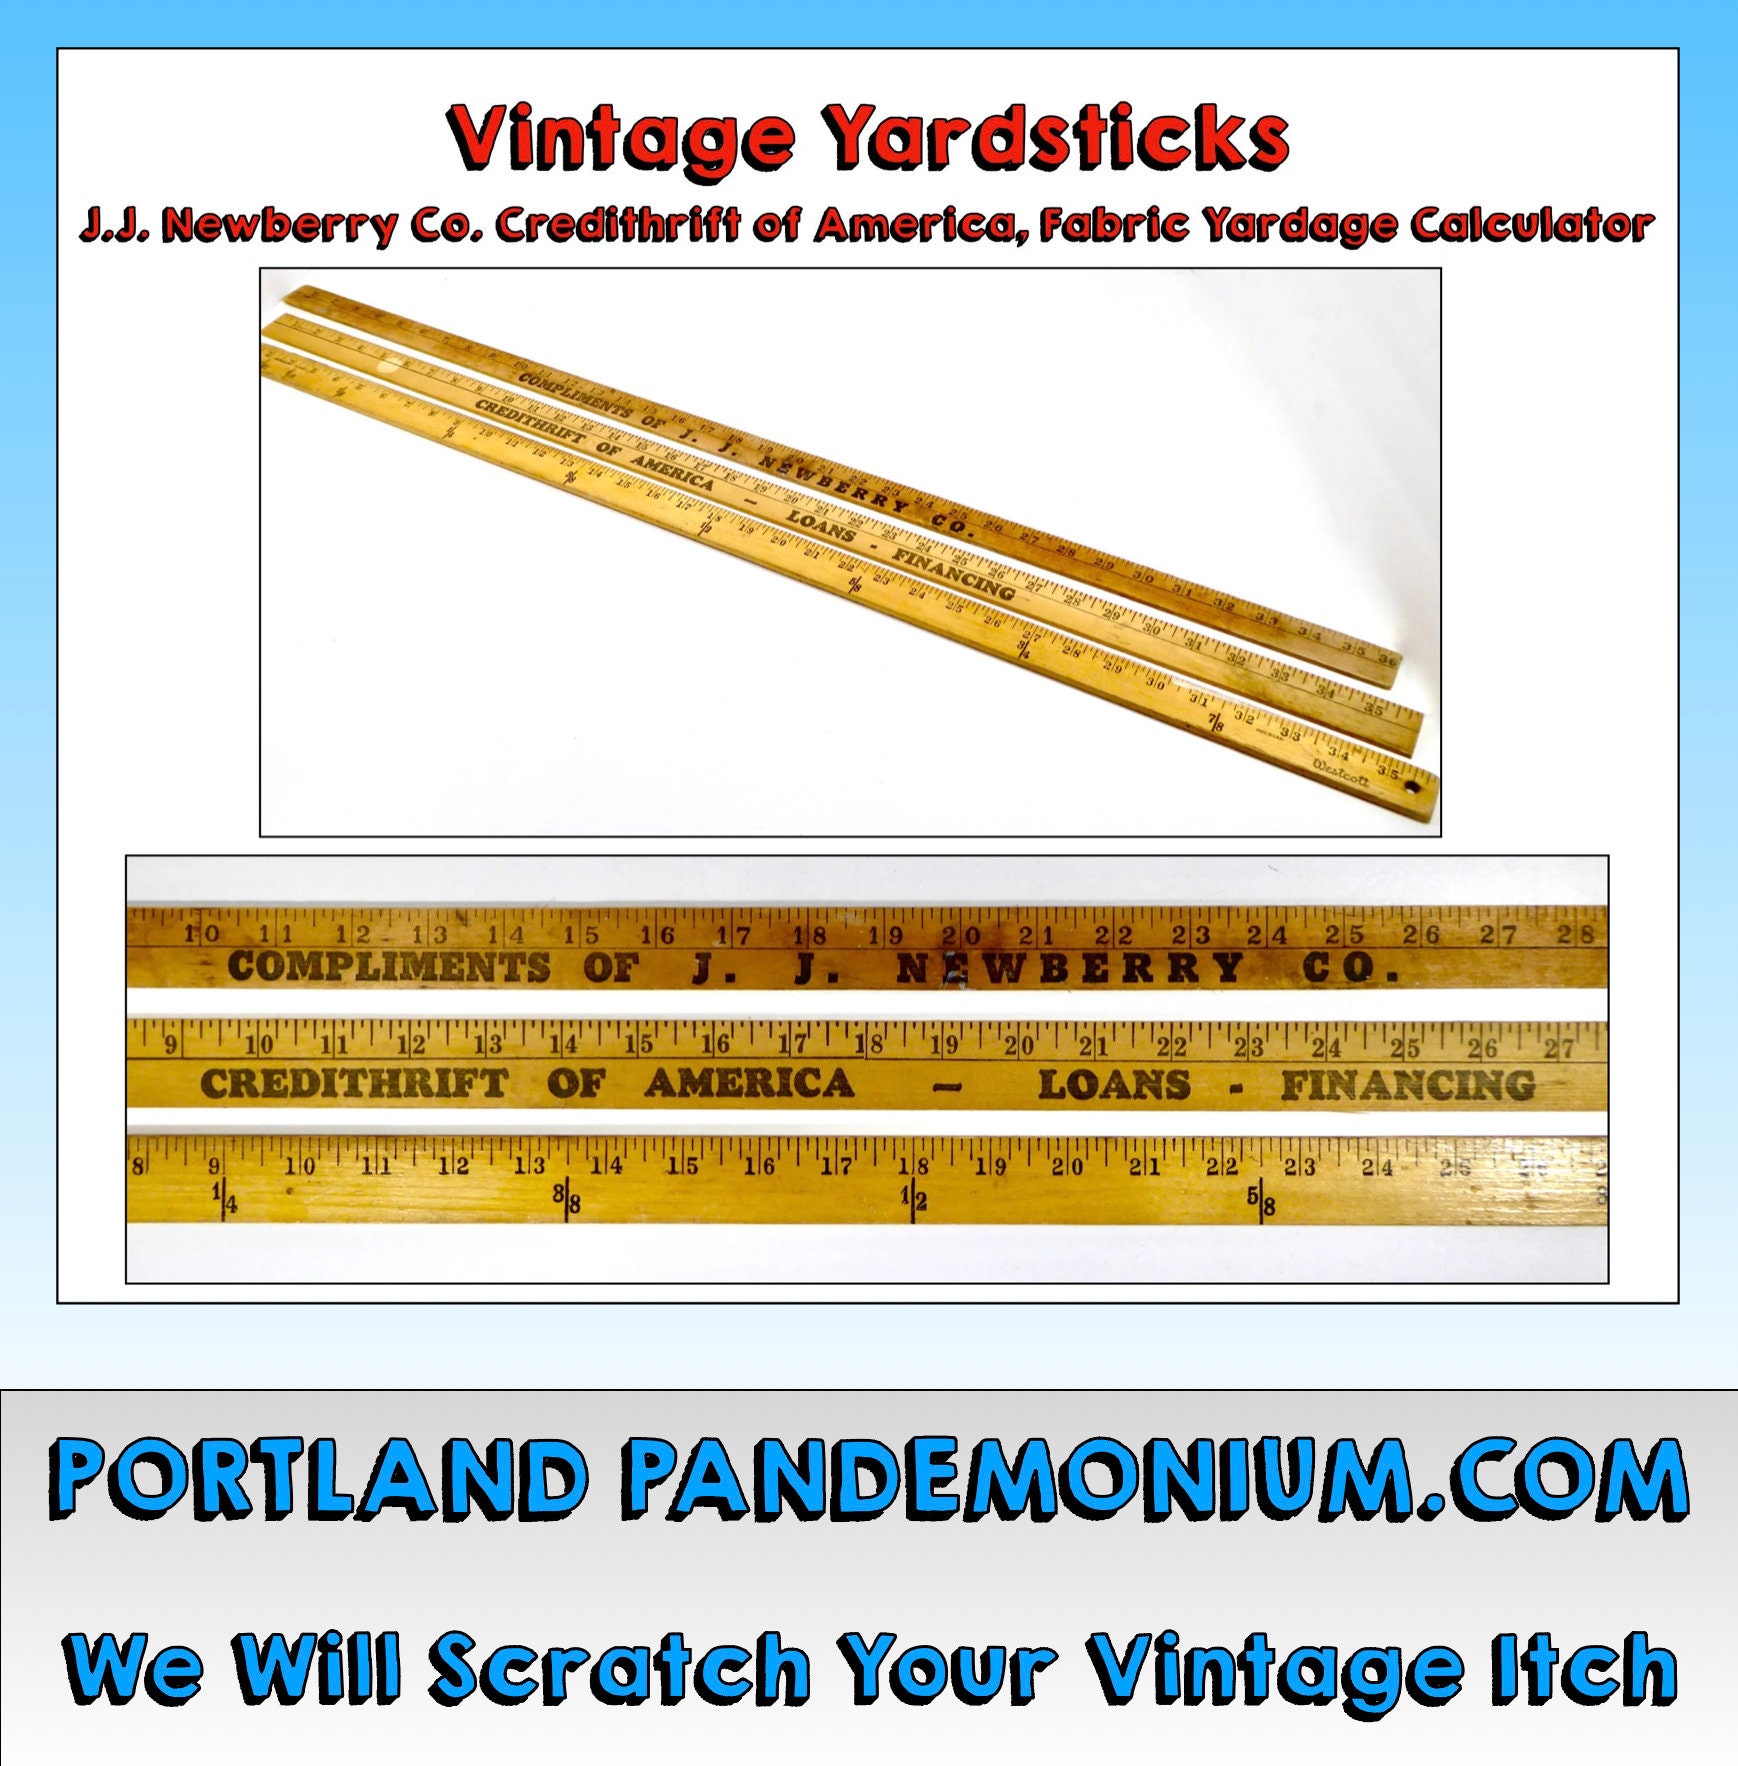 QTY 1 12 Long Wood Ruler, Measuring Tool, School Ruler, Teacher Ruler,  Craft Ruler, Straight Edge Ruler, Drafting Tool, Fabric Ruler 